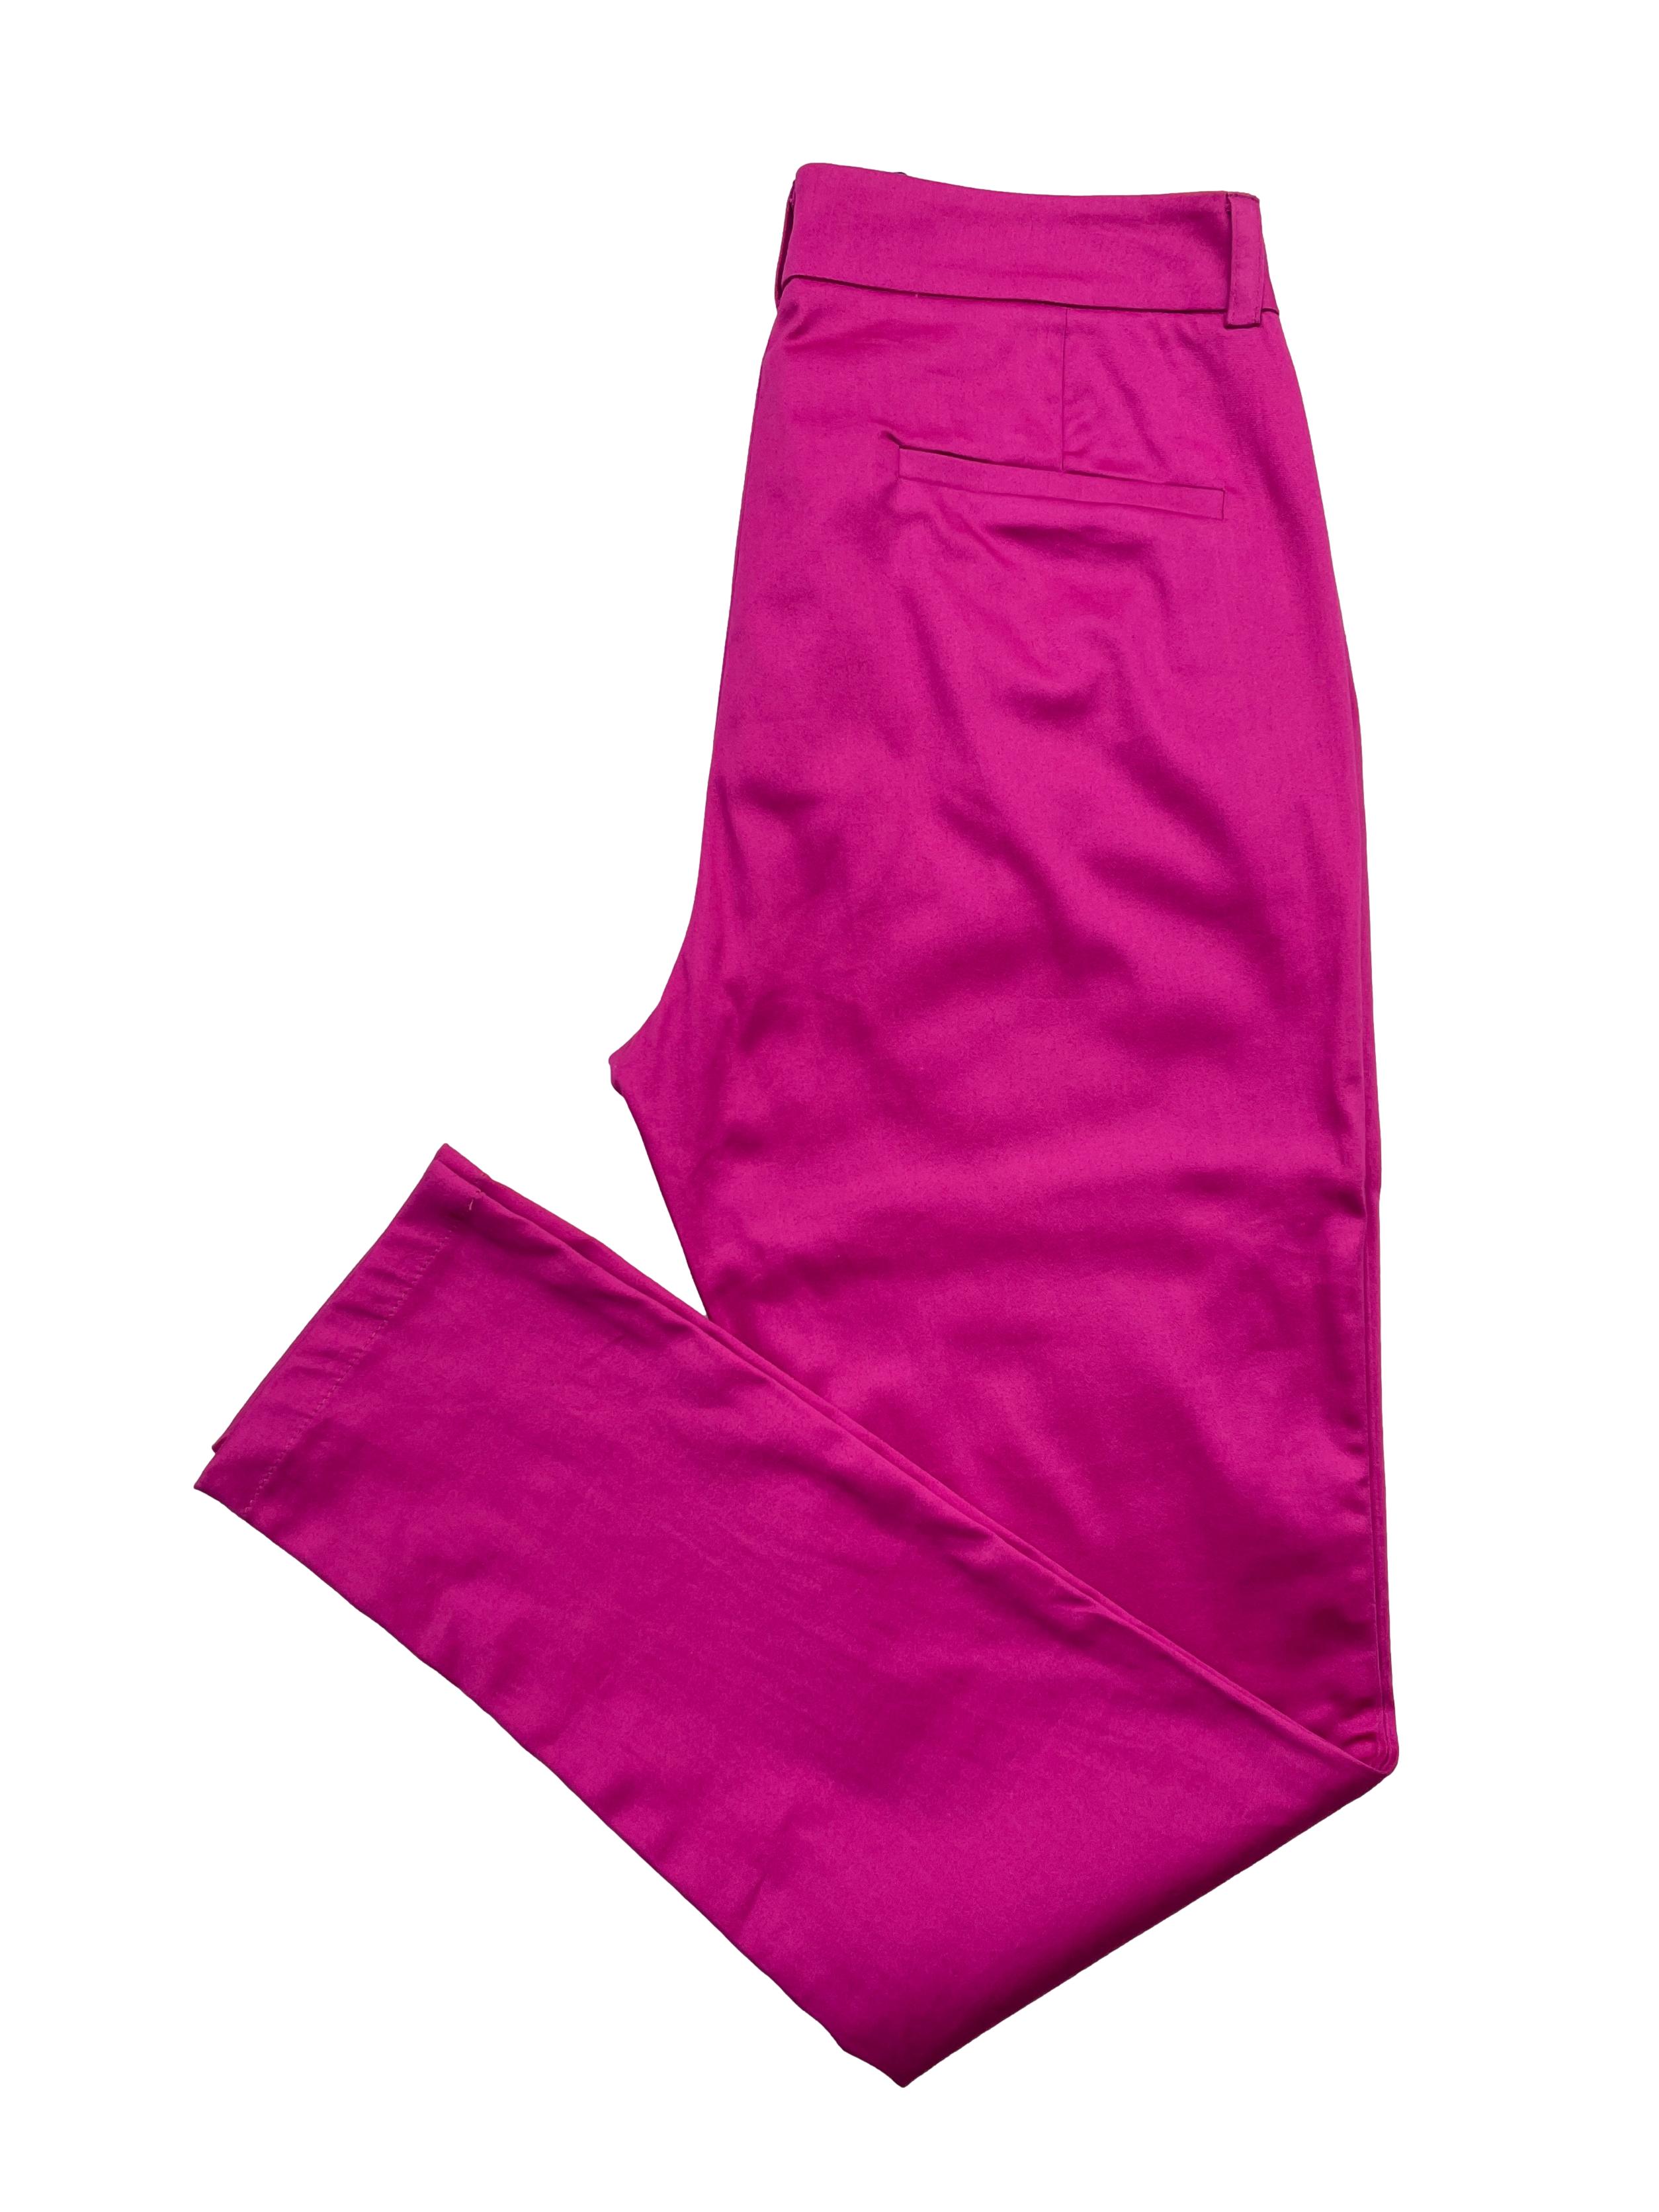 Pantalón formal Marquis fucsia, 97% algodón stretch, corte slim con bolsillos laterales. Cintura 78cm Tiro 24cm Largo 94cm